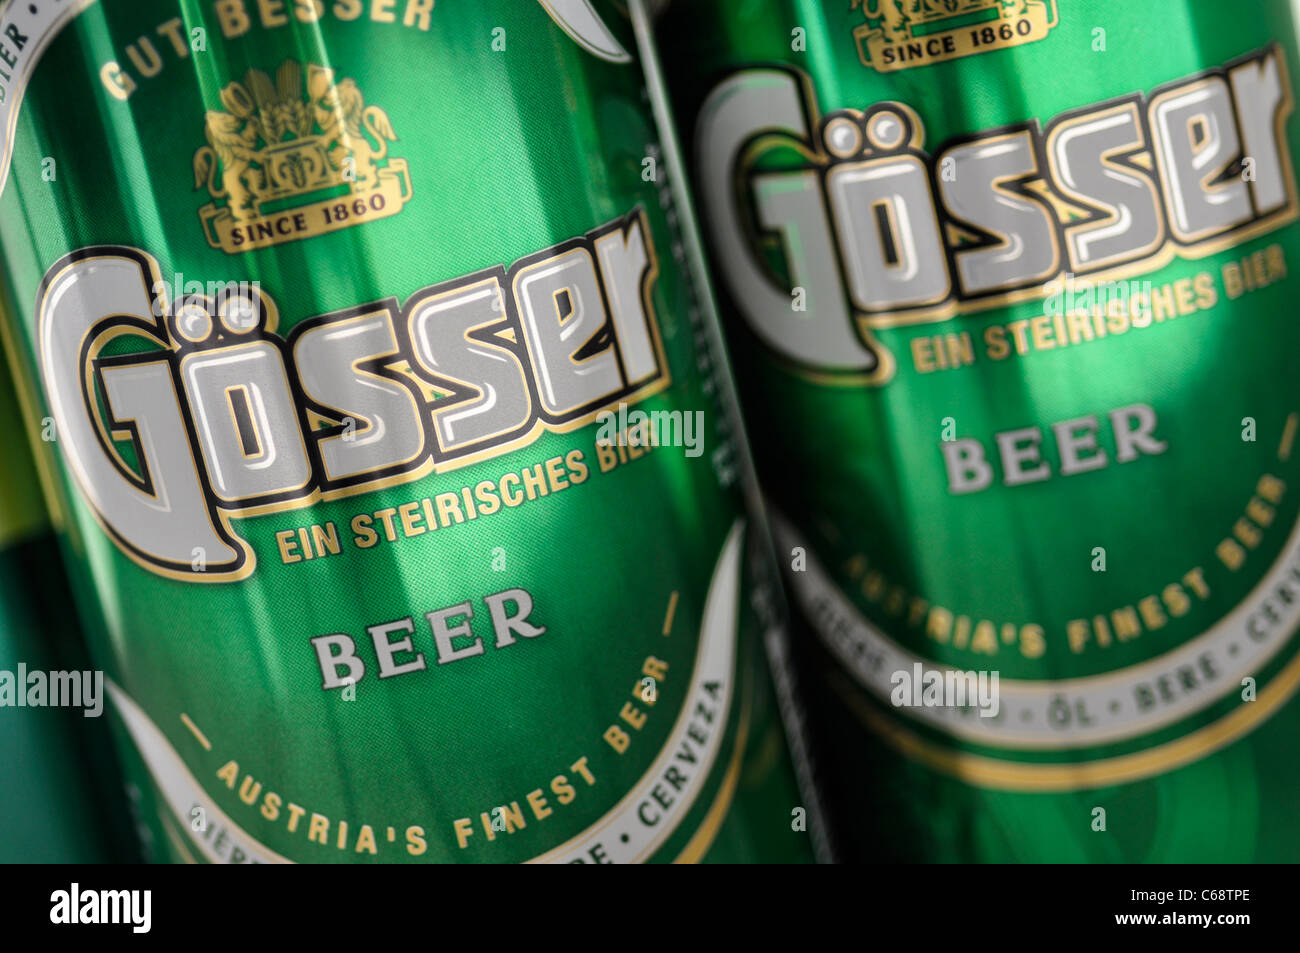 Lattine di birra, birra austriaca Gosser Foto stock - Alamy